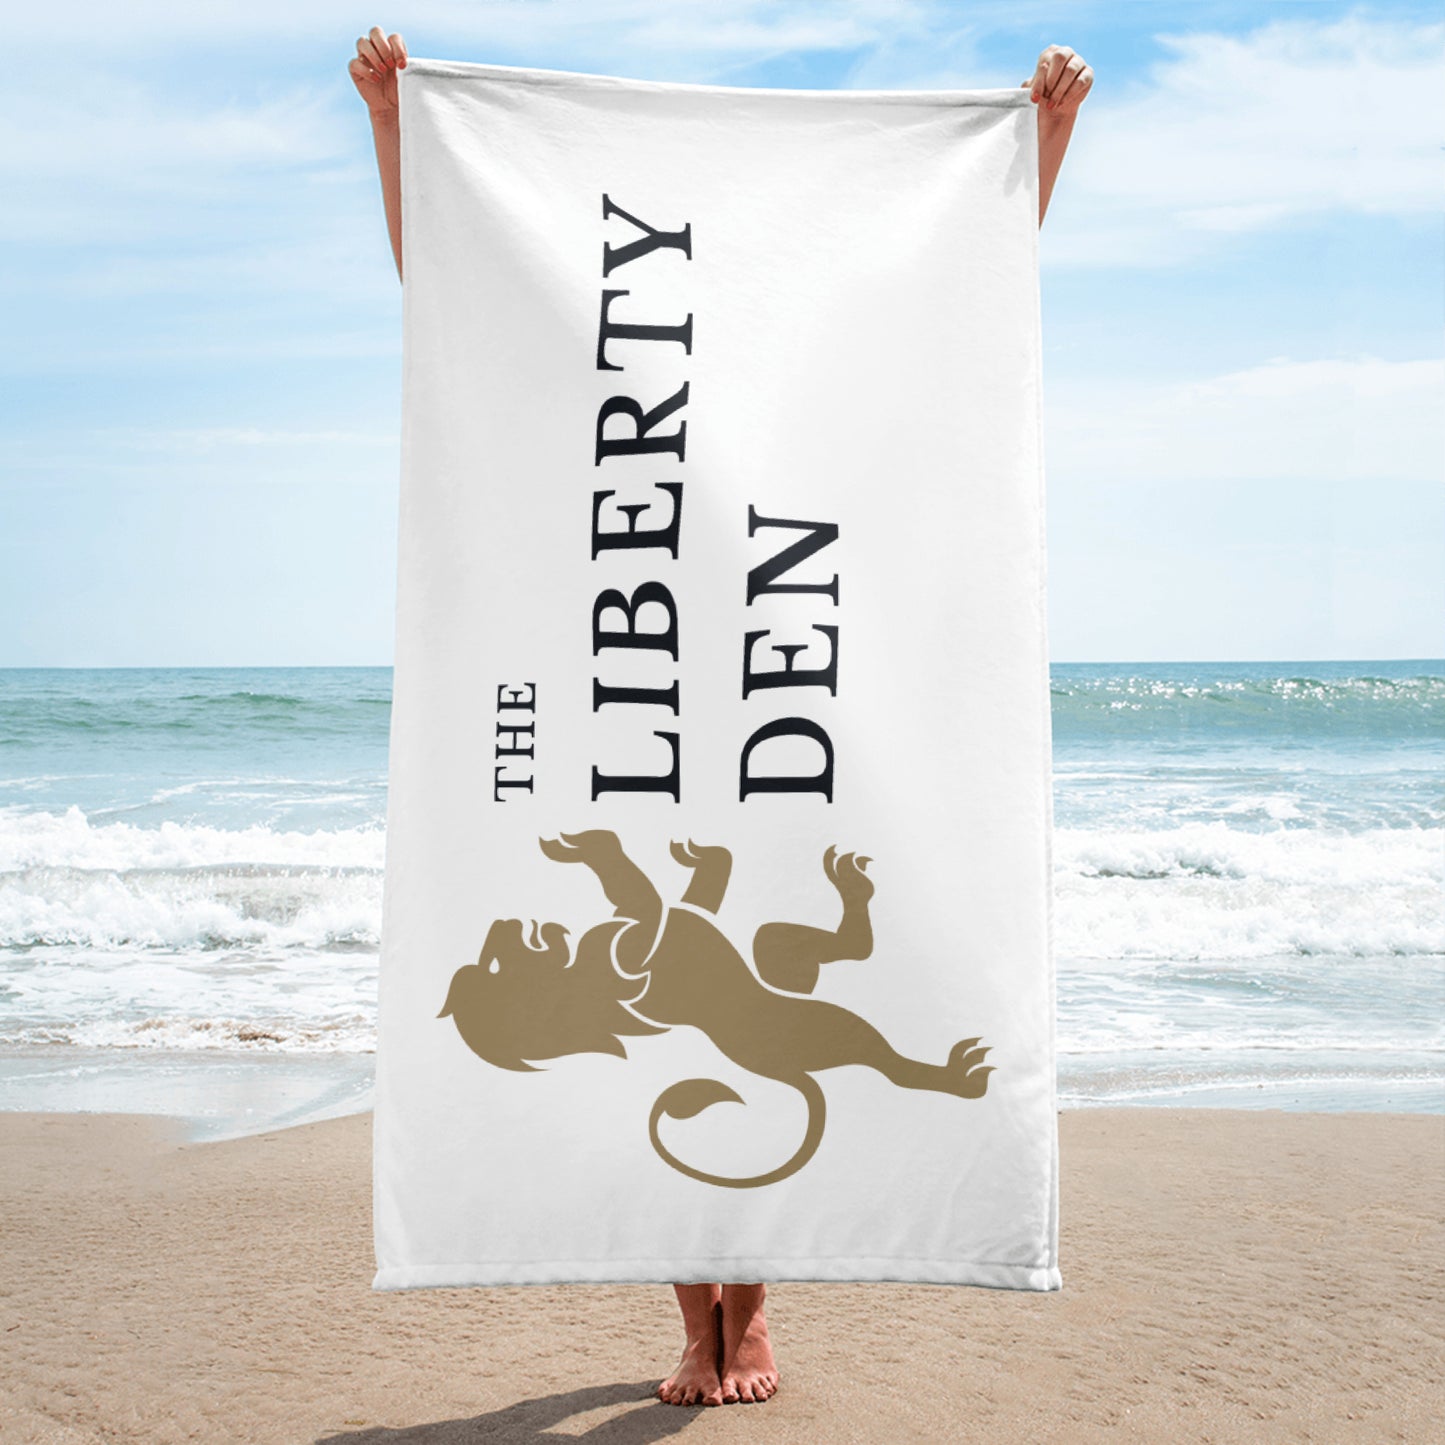 The Liberty Den Towel (cream)